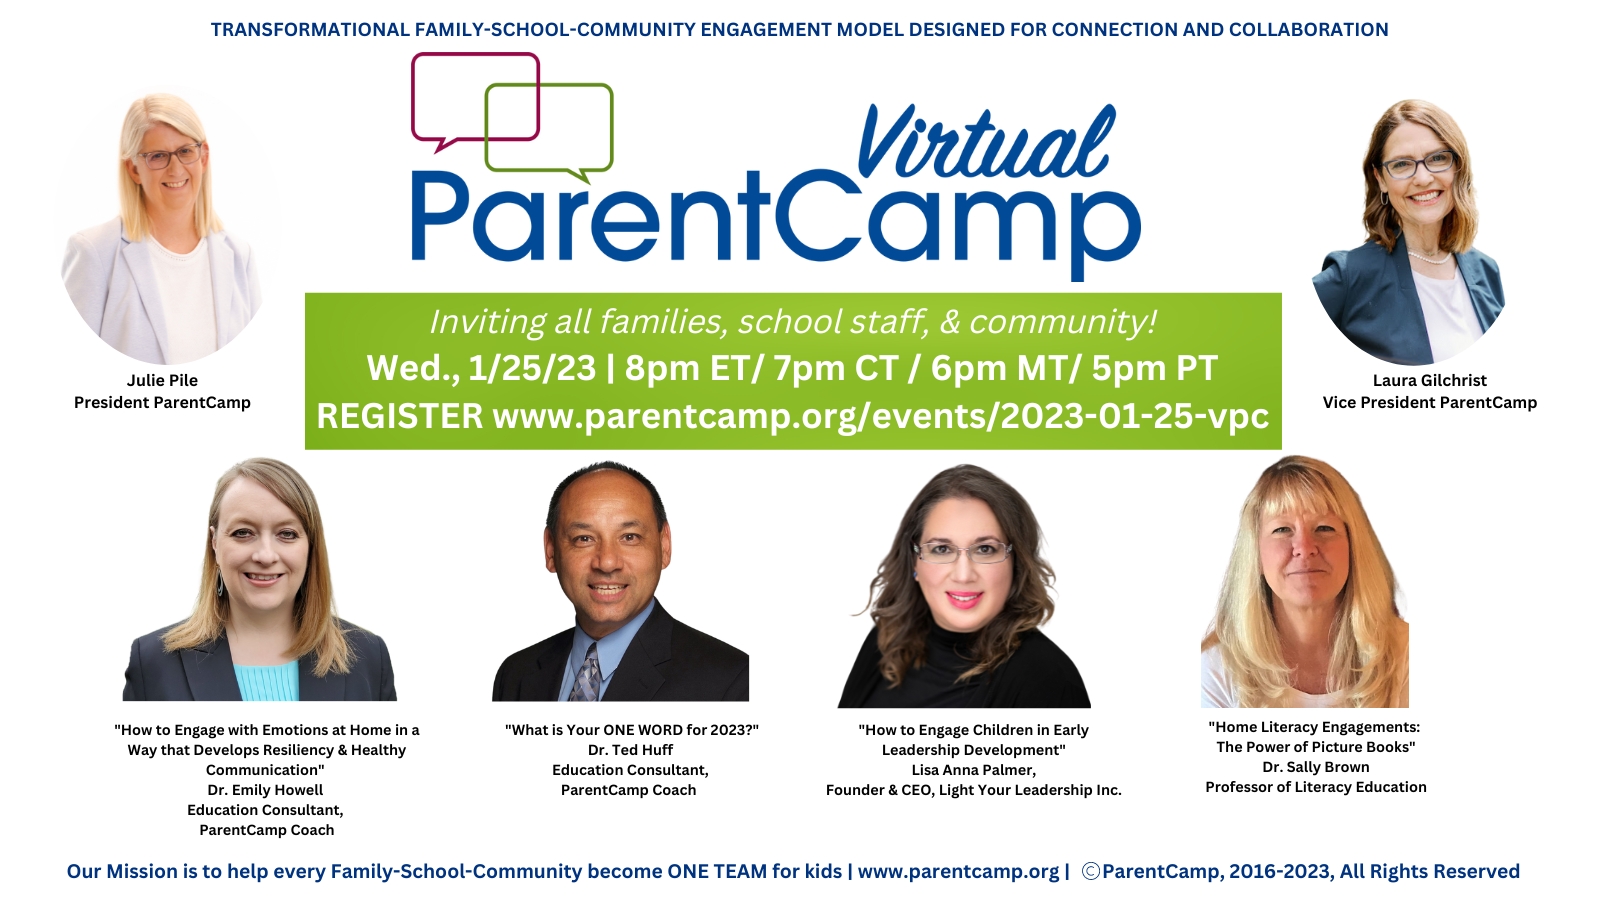 Virtual ParentCamp takes place 1/25/23